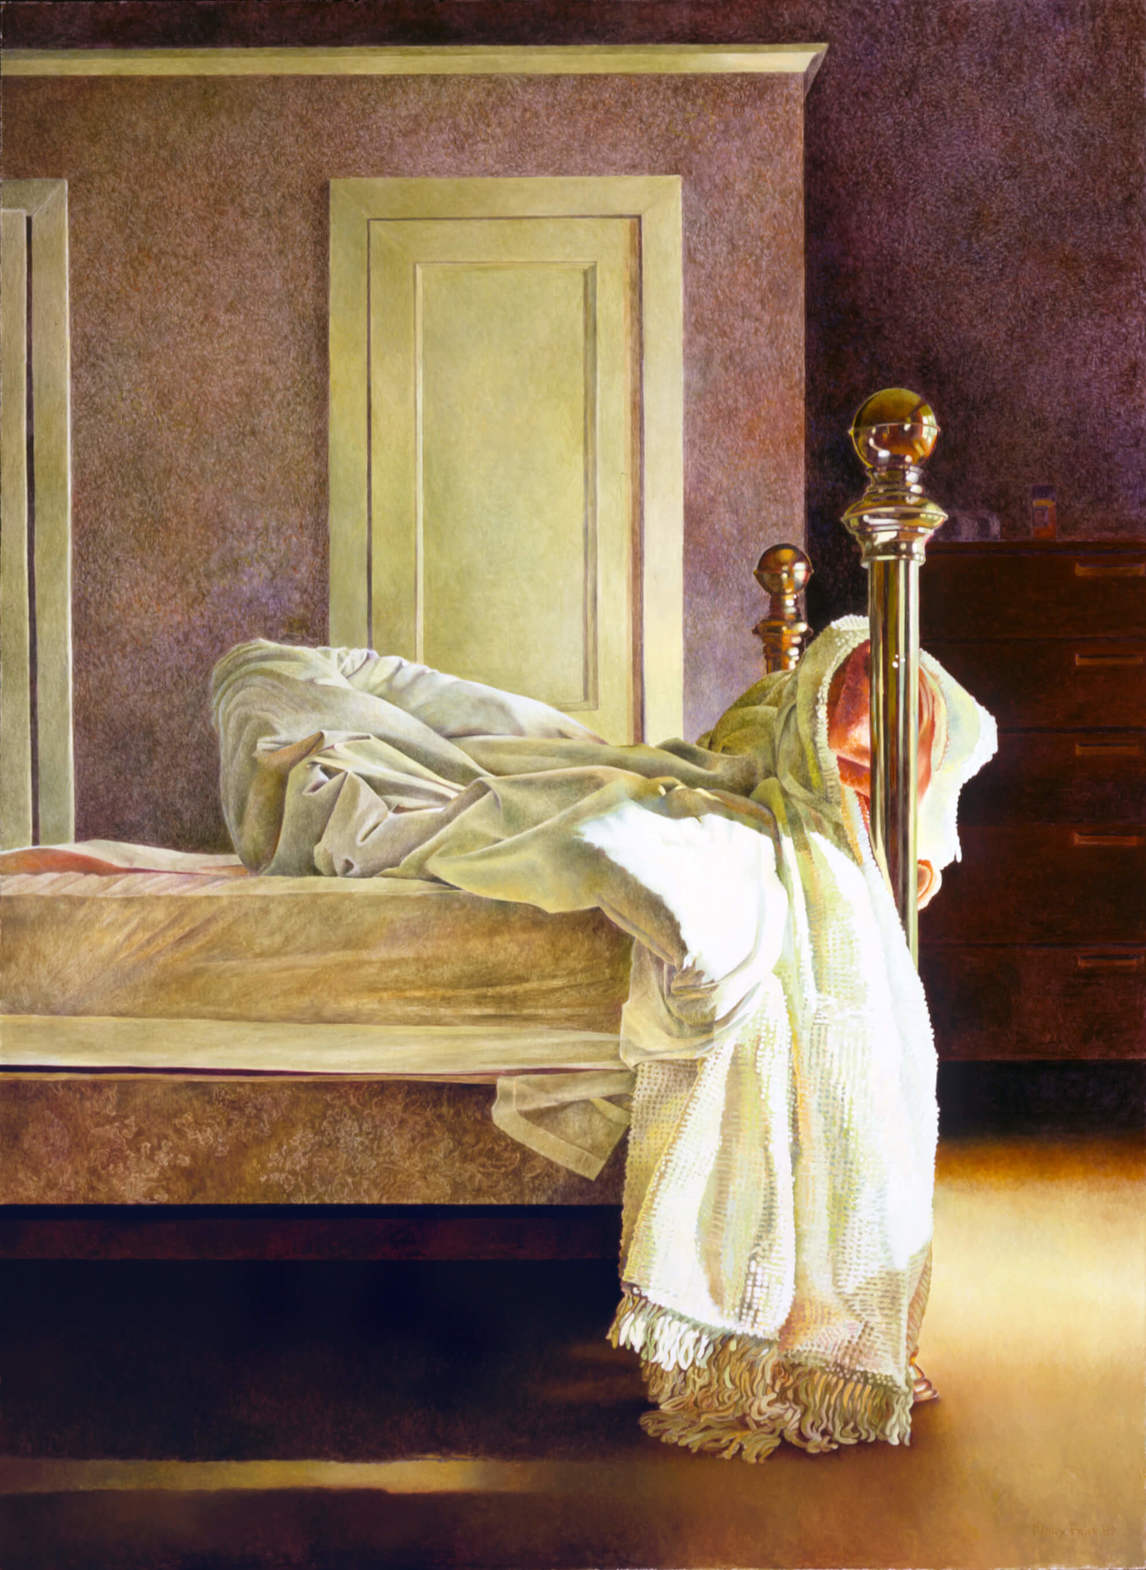 Mary Pratt, Bedroom (Chambre), 1987